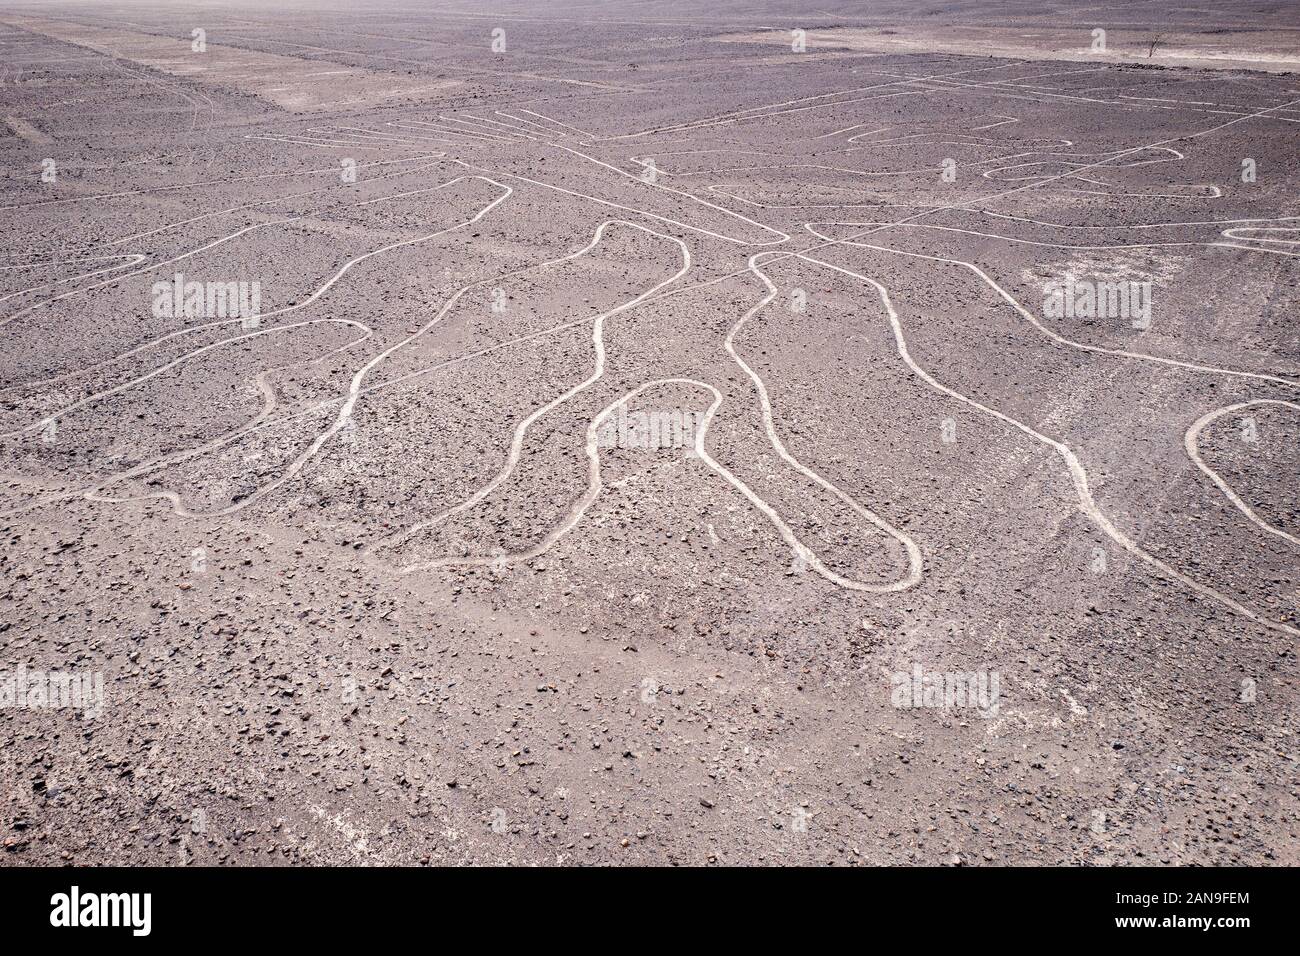 Pre-Columbian Nazca Lines geoglyphs in the Nazca Desert, Southern Peru Stock Photo